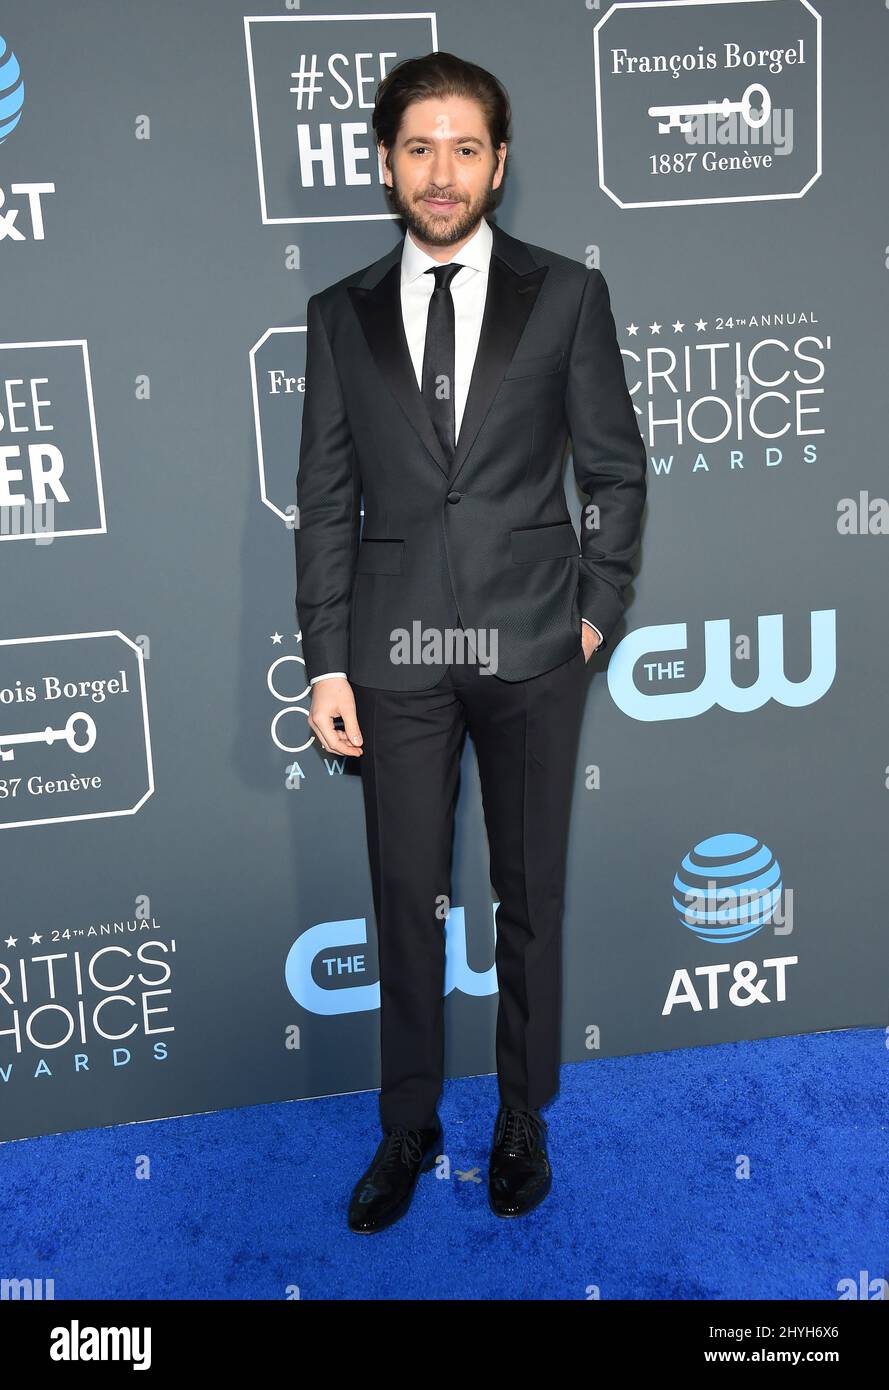 Michael Zegen bei den Annual Critics' Choice Awards 24., die am 13. Januar 2019 in Santa Monica, CA, bei Barker Hanger verliehen wurden. Stockfoto